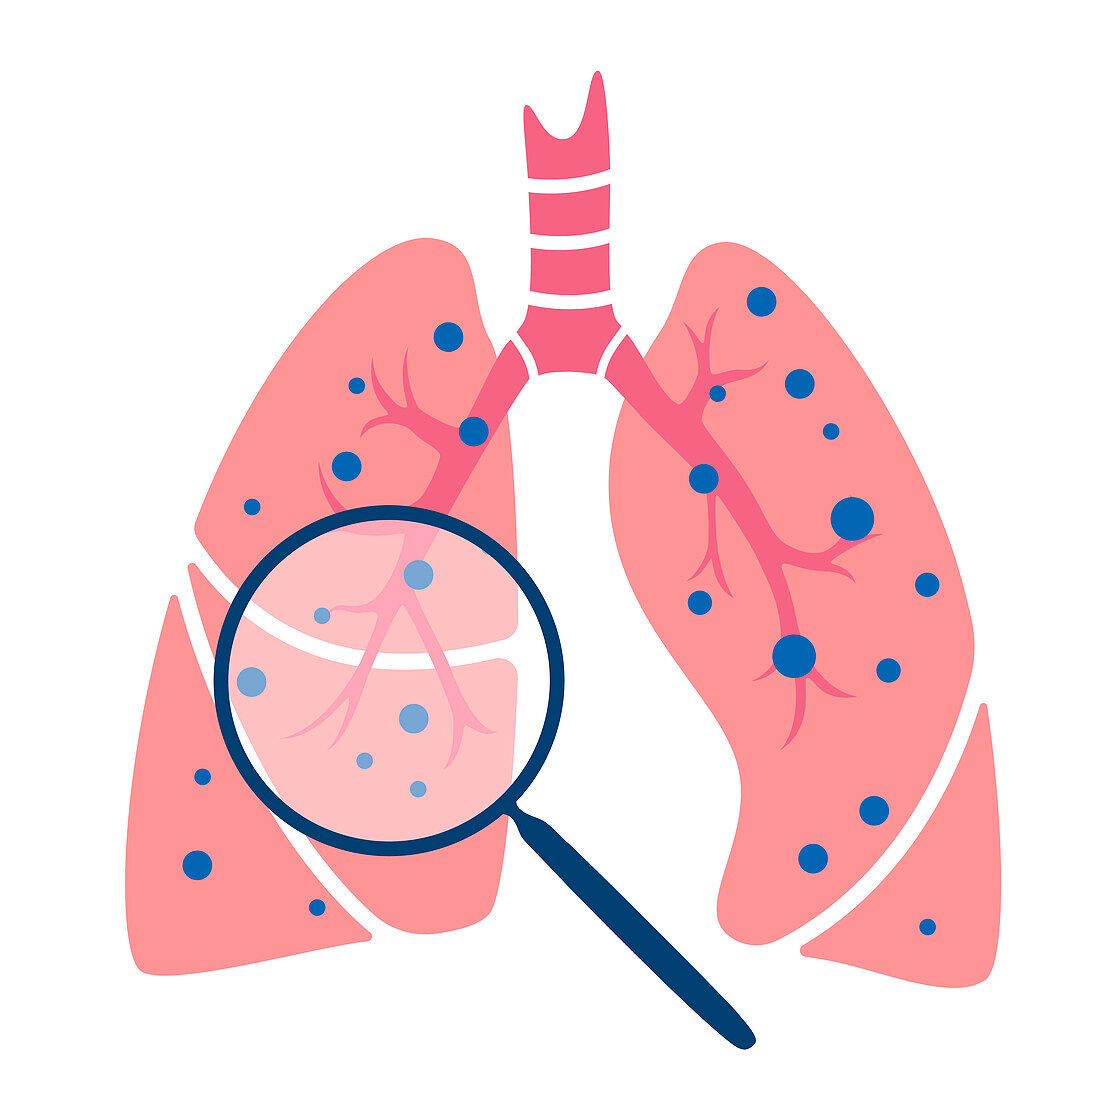 Lung disease, conceptual illustration